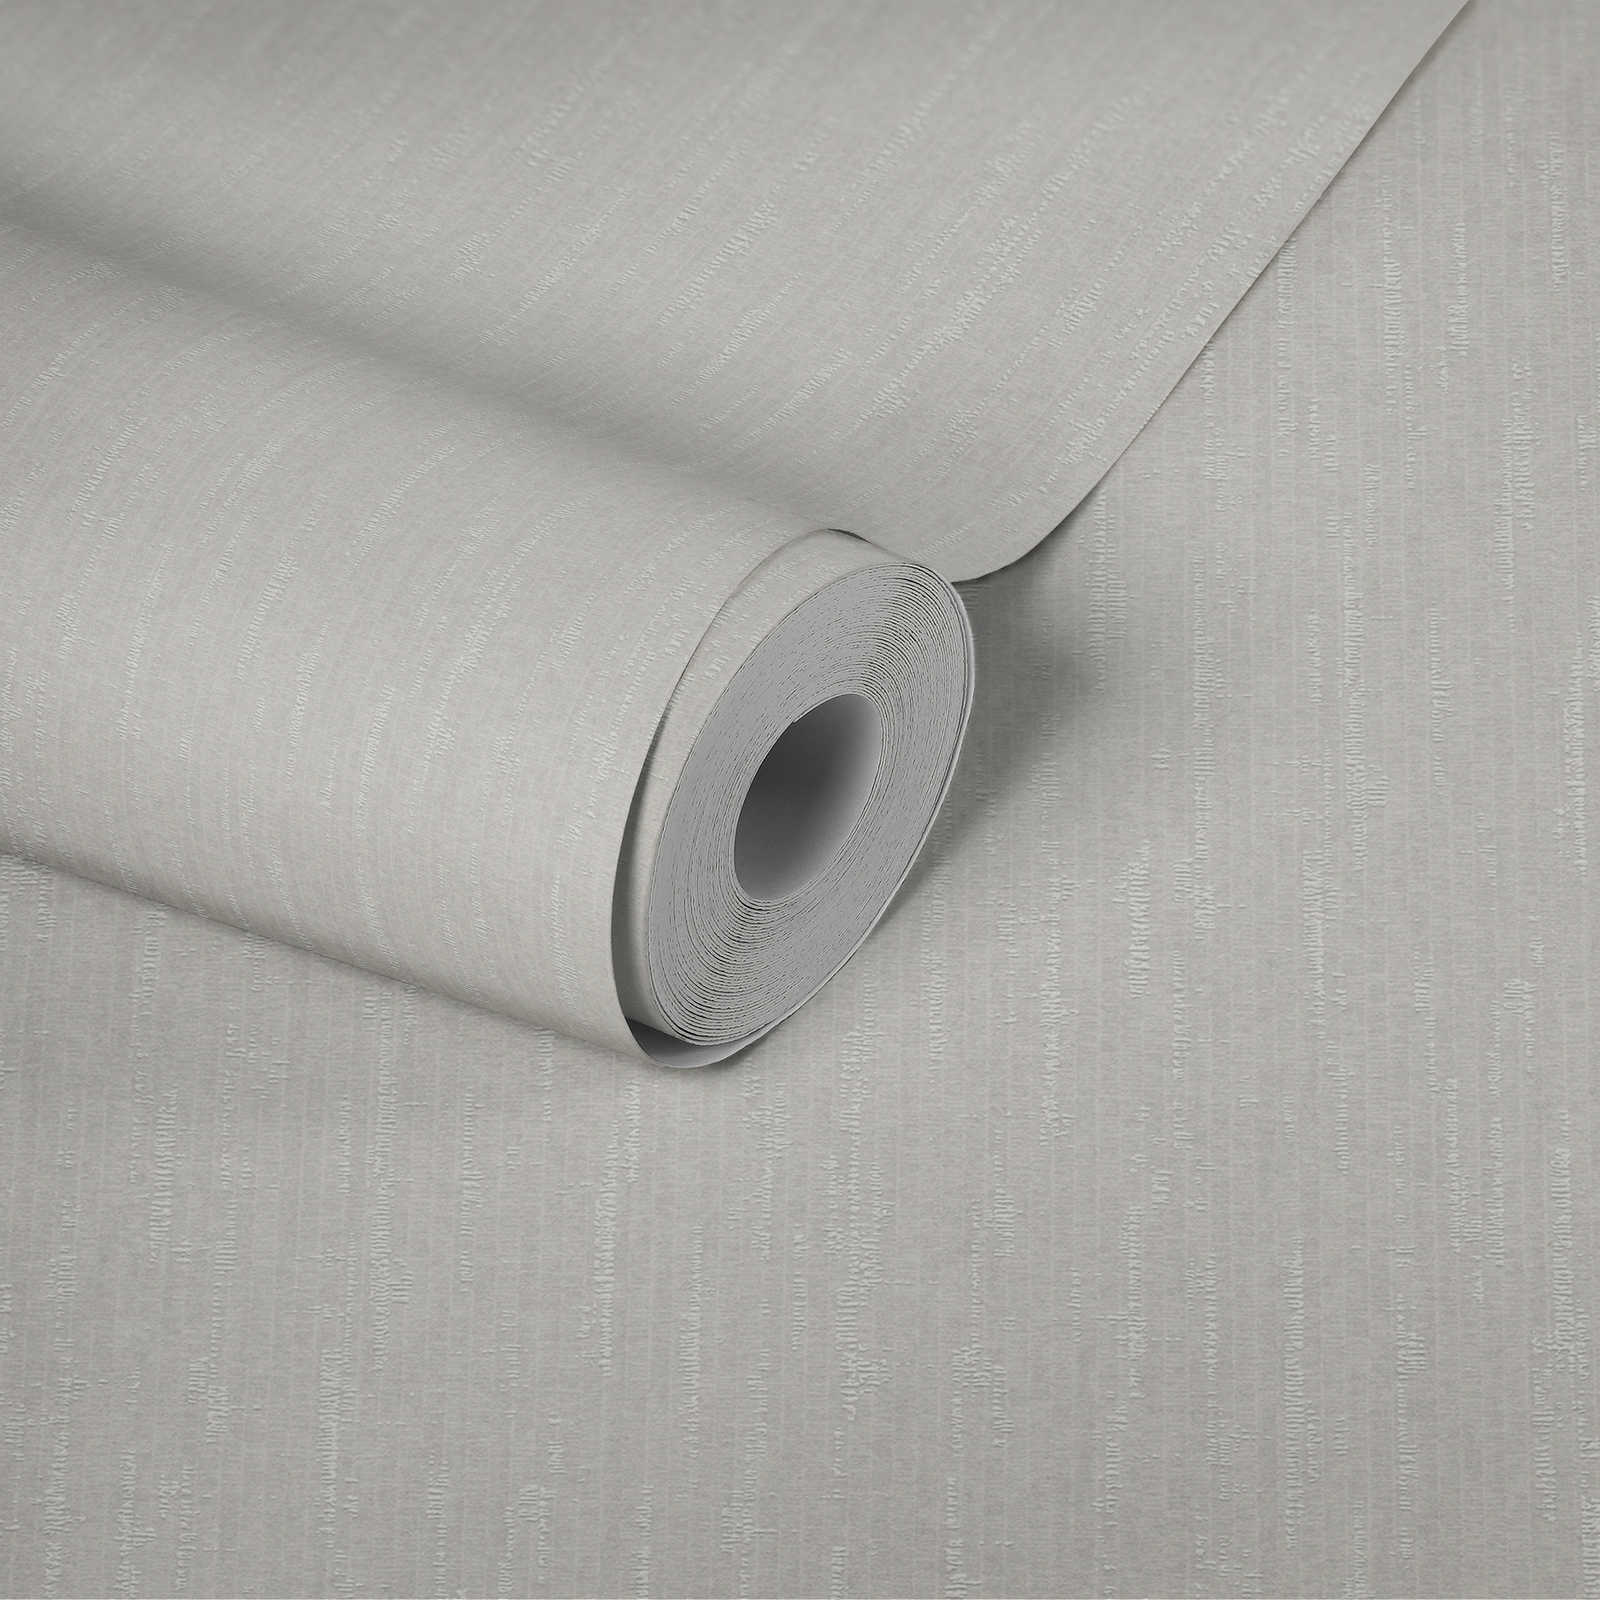             White non-woven wallpaper with glitter effect and texture design - white
        